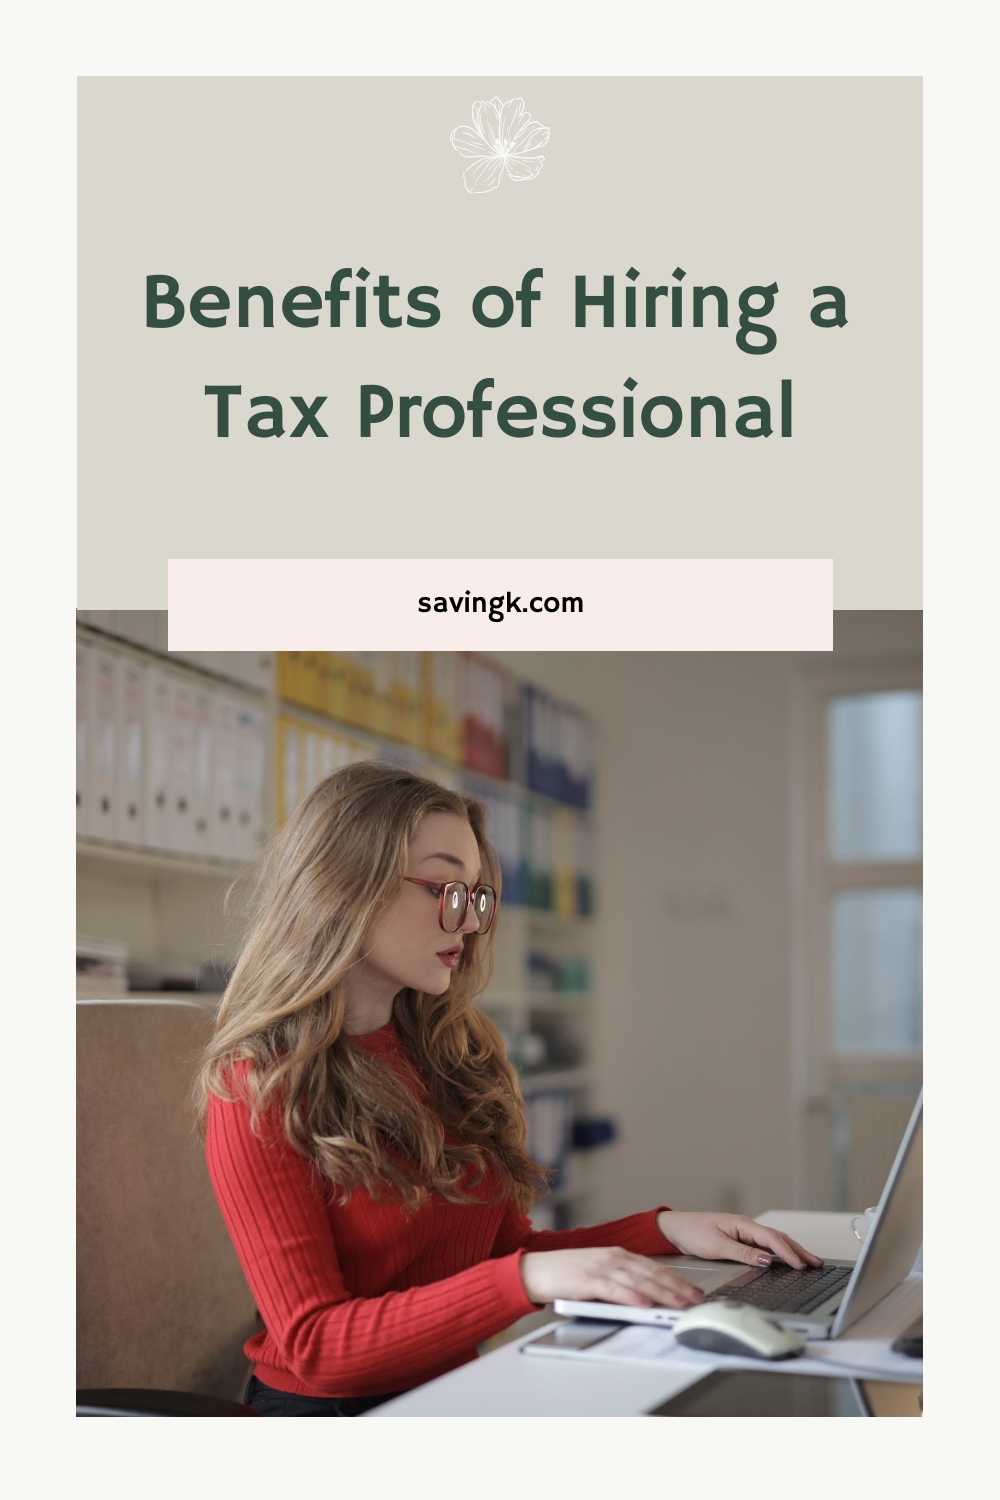 Benefits of Hiring a Tax Professional